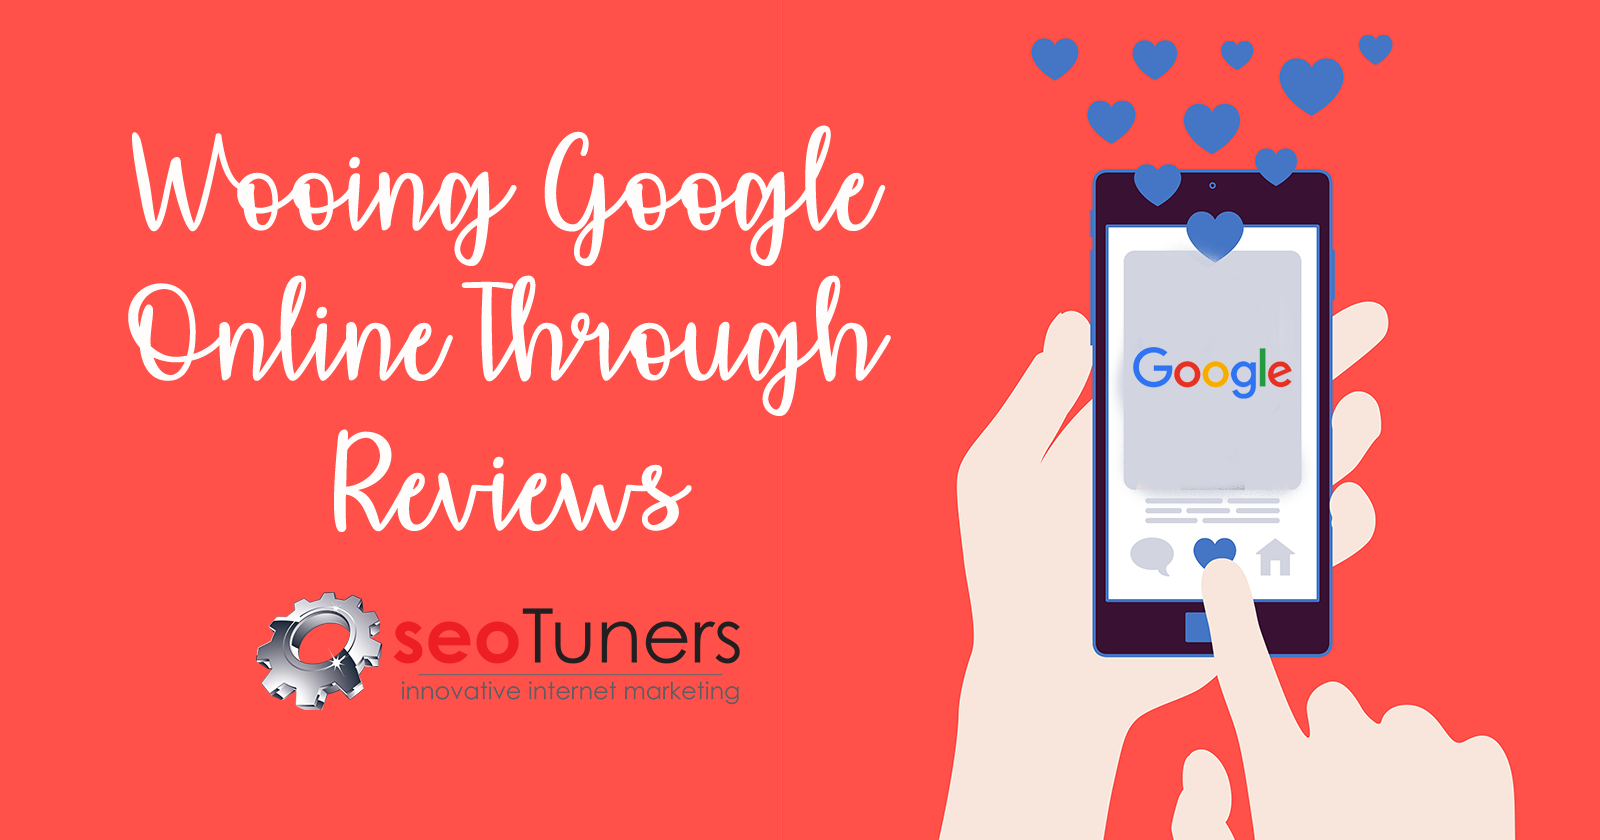 Wooing Google Online Through Reviews